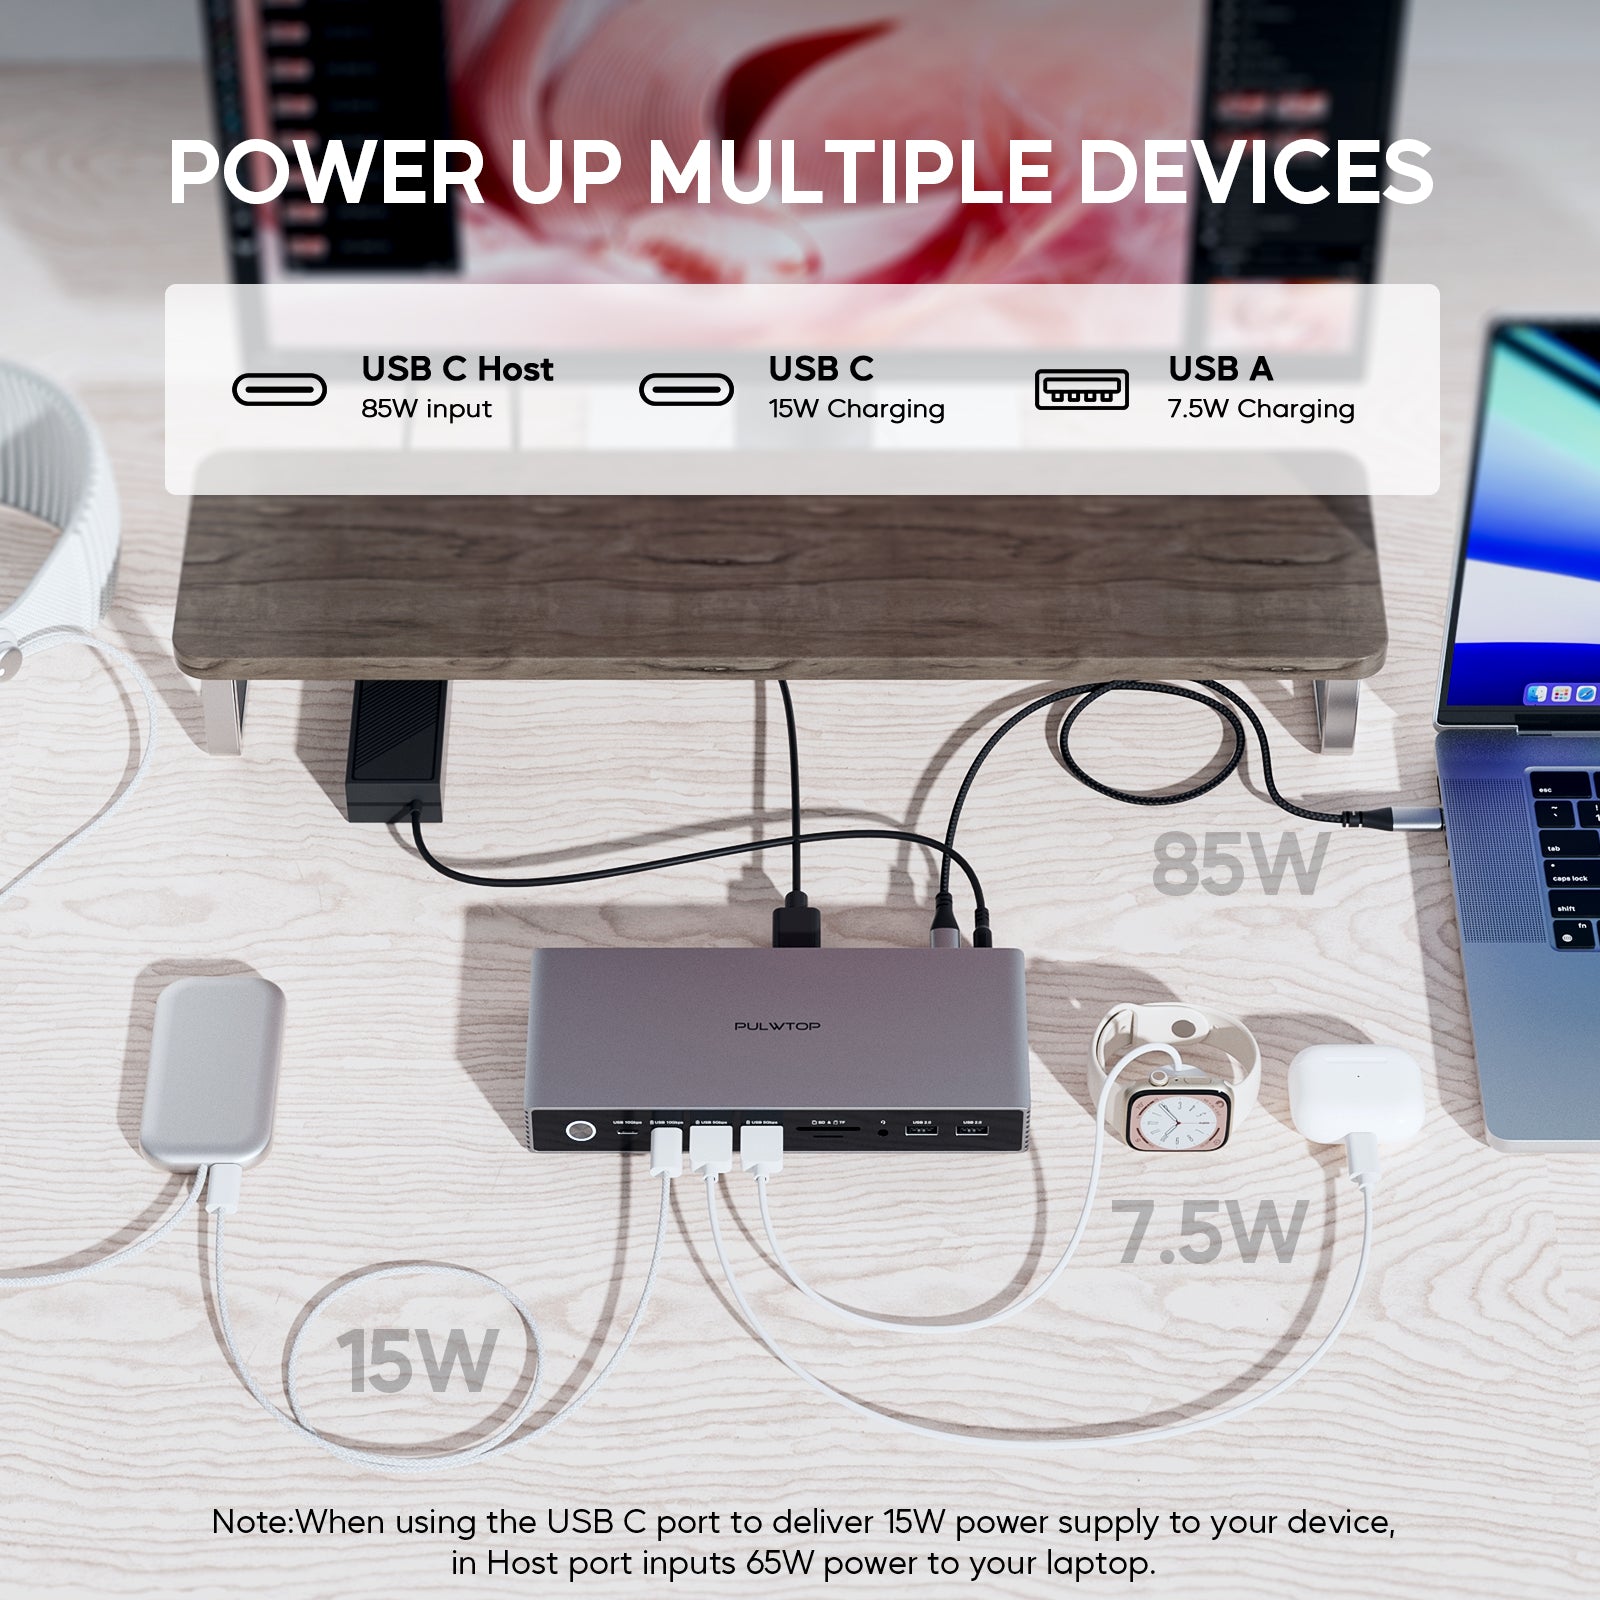 PULWTOP USB C DisplayLink Docking Station Dual Display with HDMI 4K@60Hz, DisplayPorts, USB C Data,USBA, Ethernet, Audio